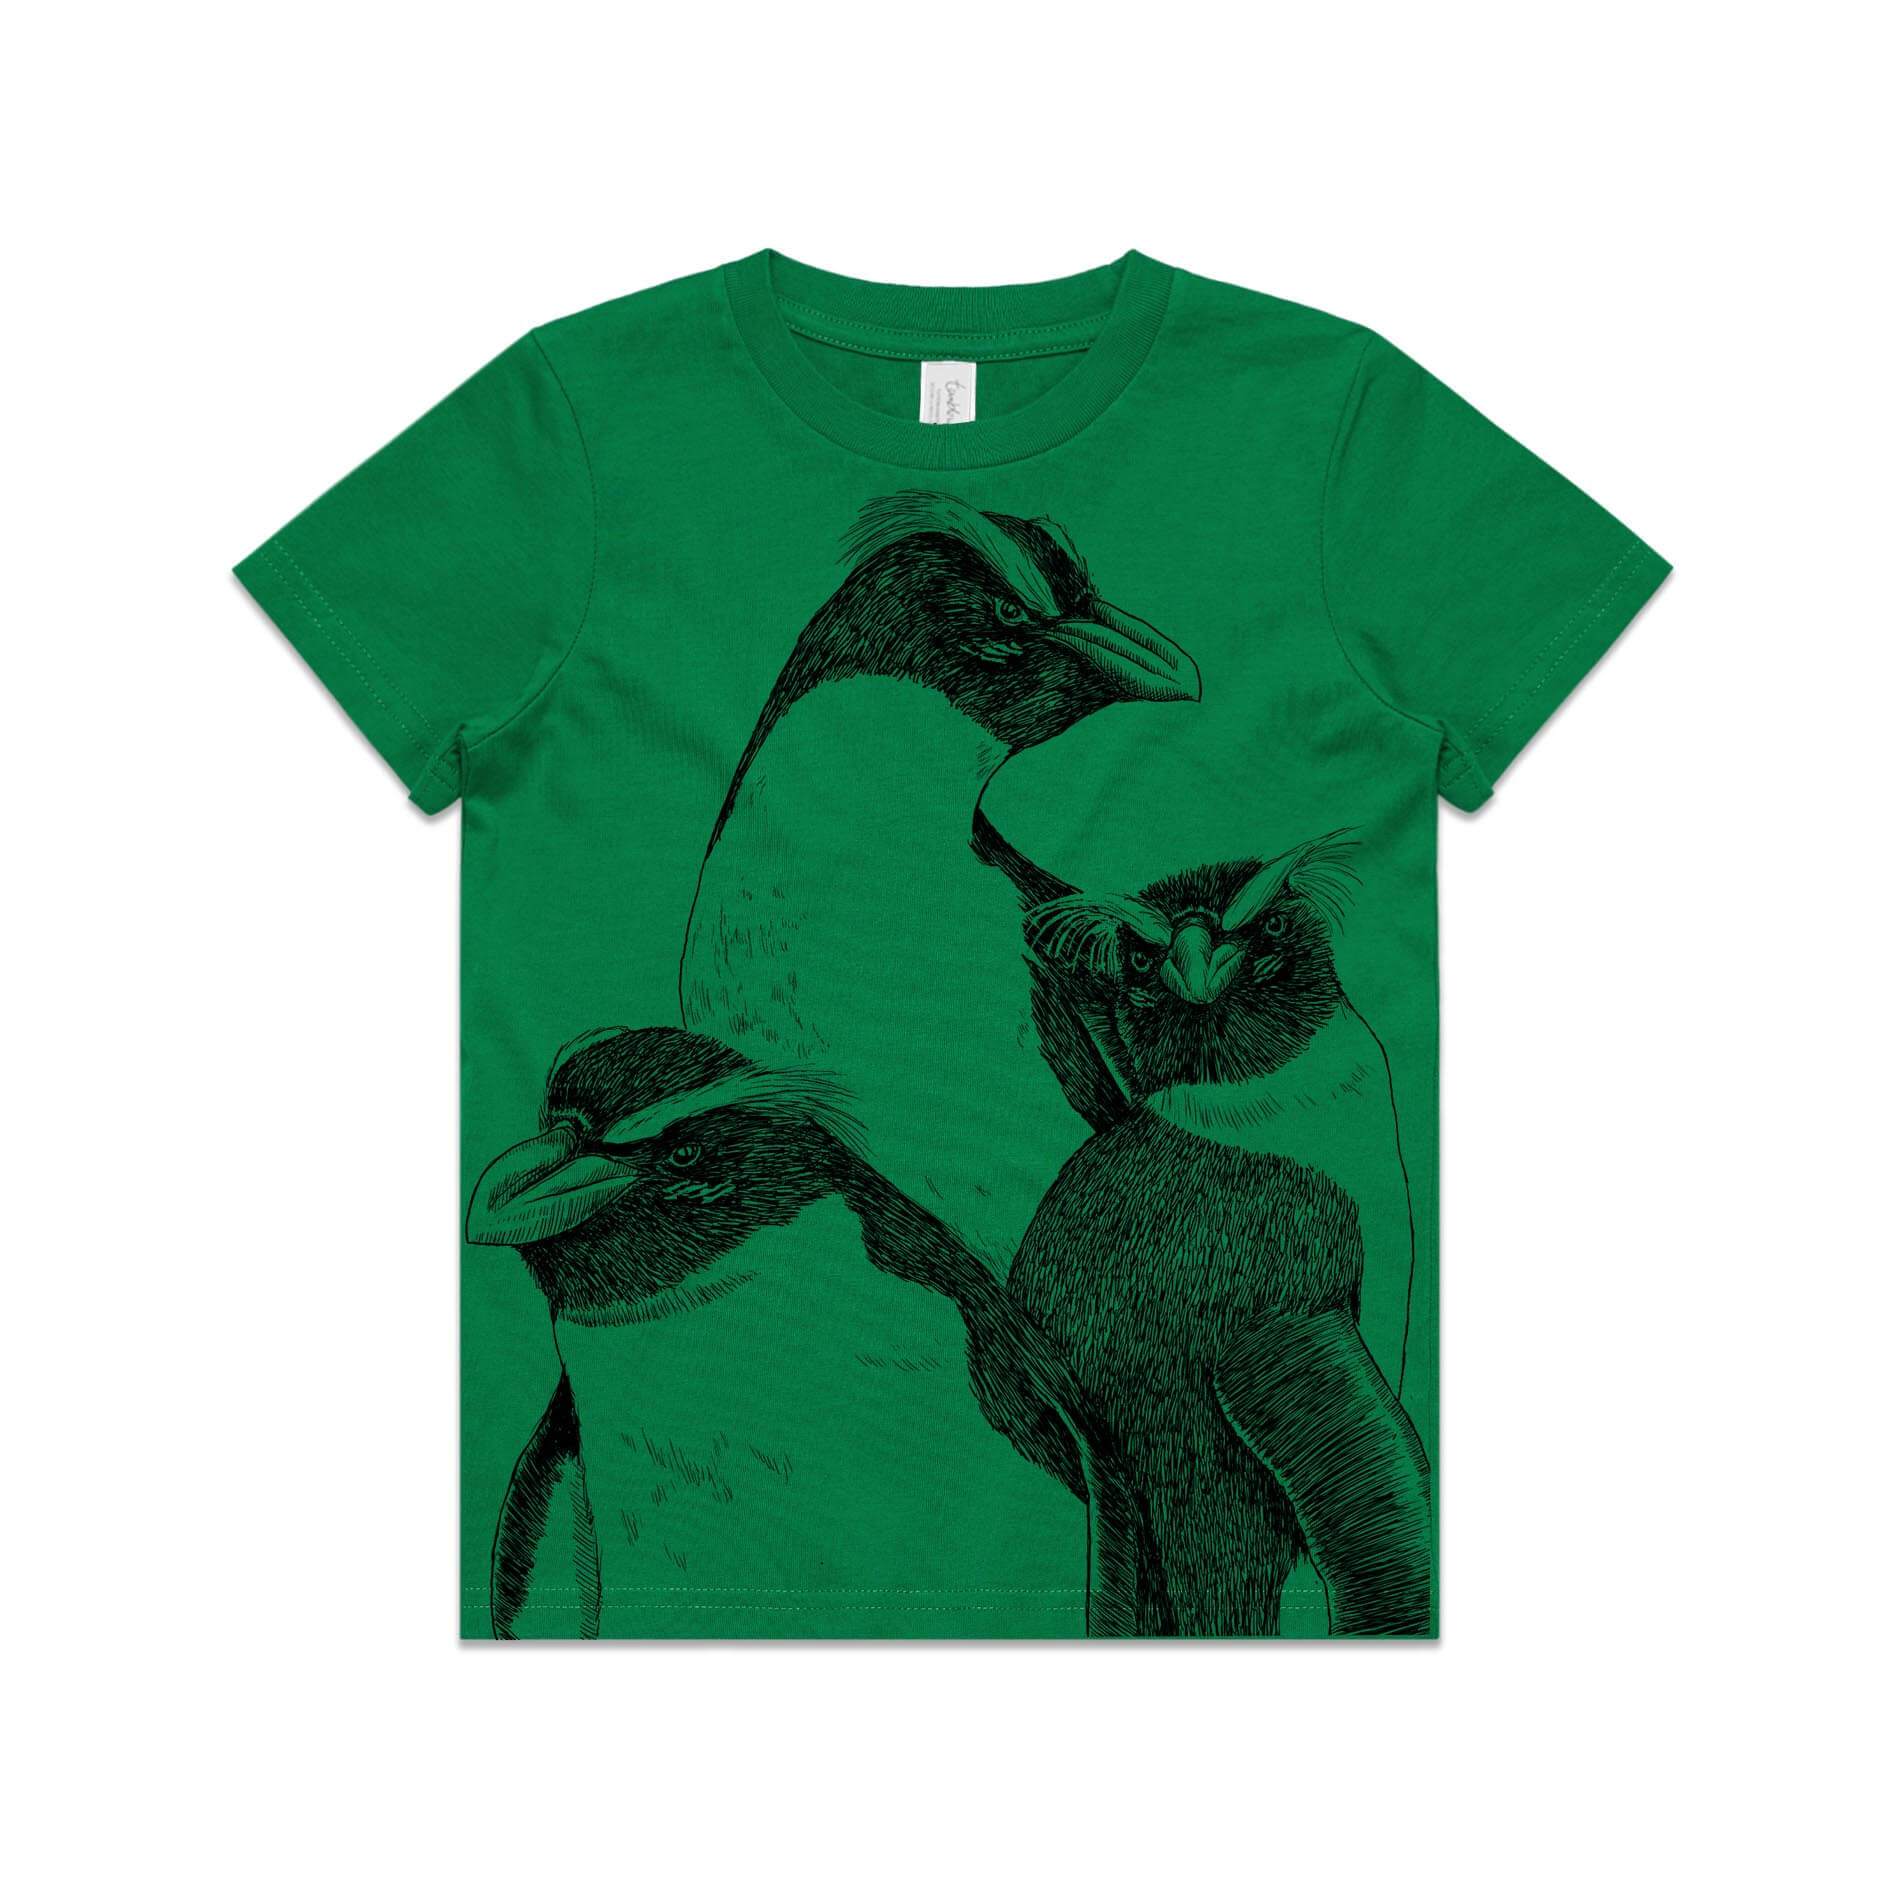 Green, cotton kids' t-shirt with screen printed Kids tawaki/fiordland crested penguin design.